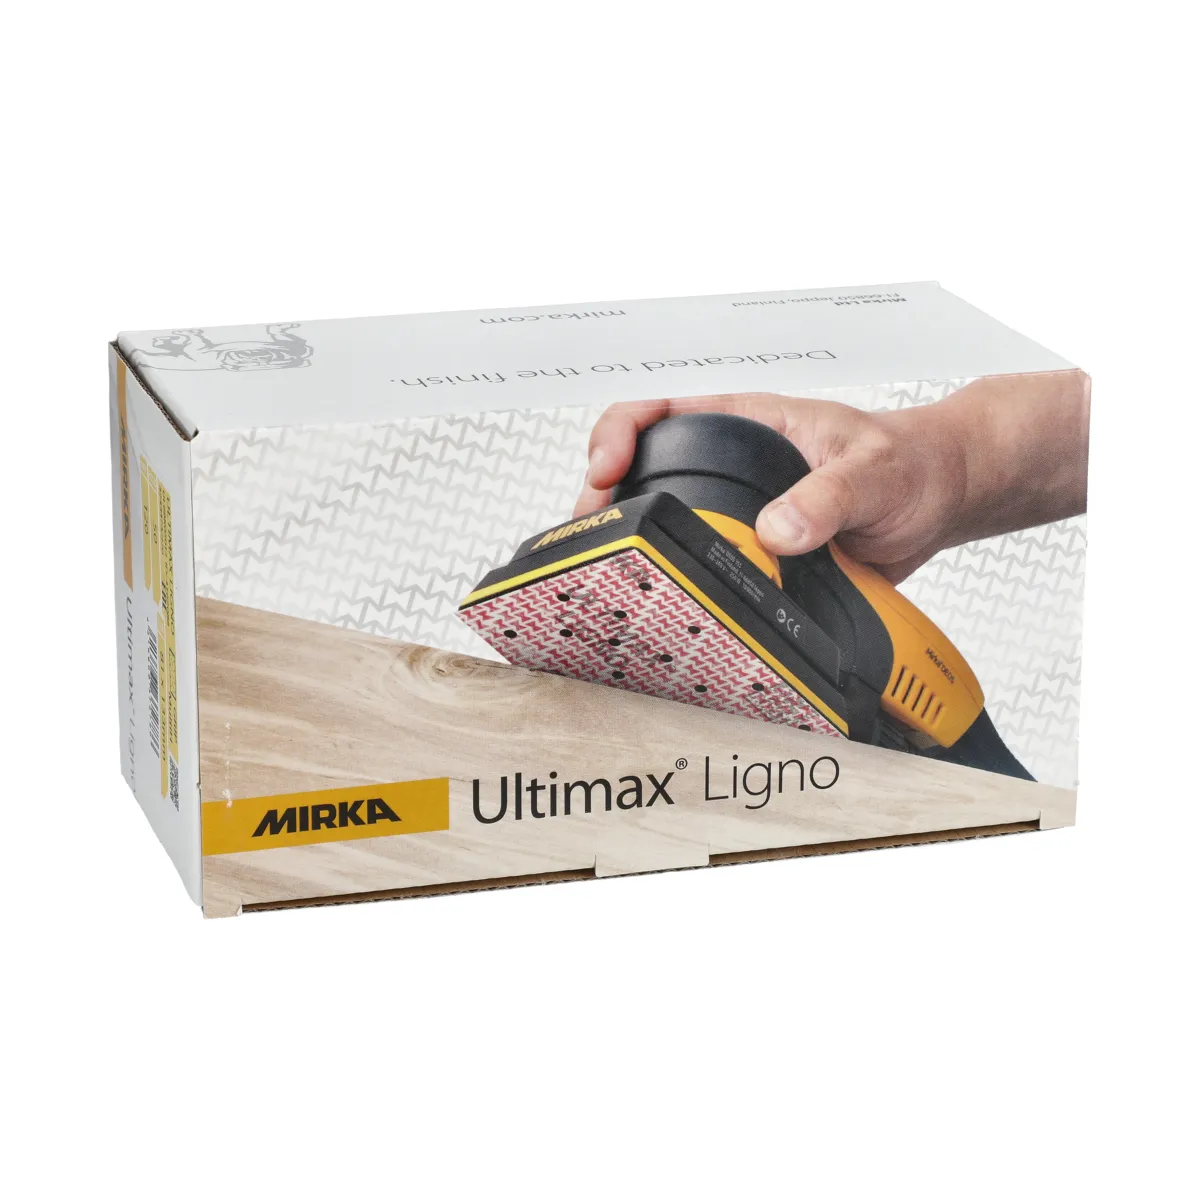 A box of the mekka ultimax ligno